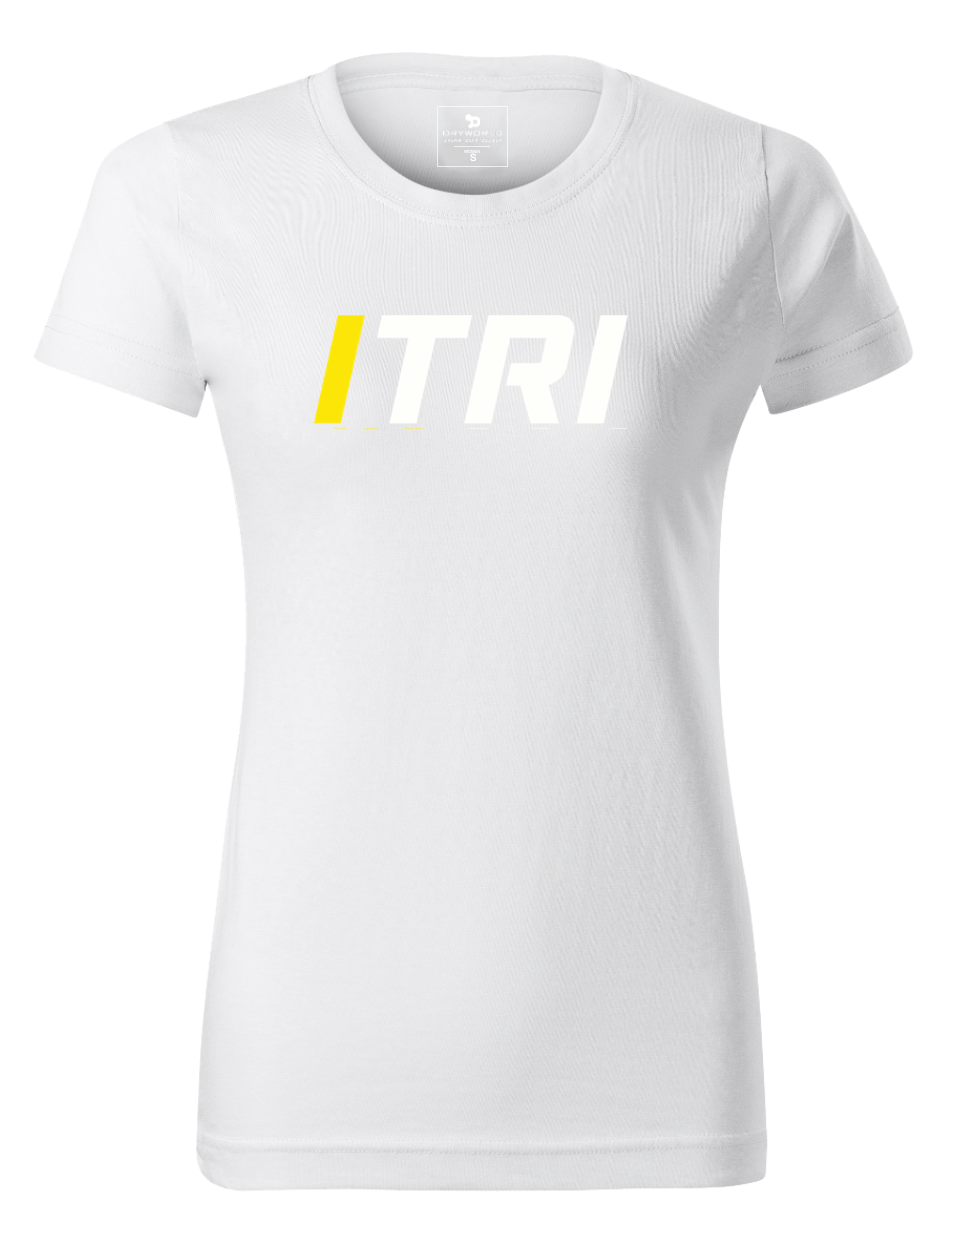 ITRI Tee - Women's